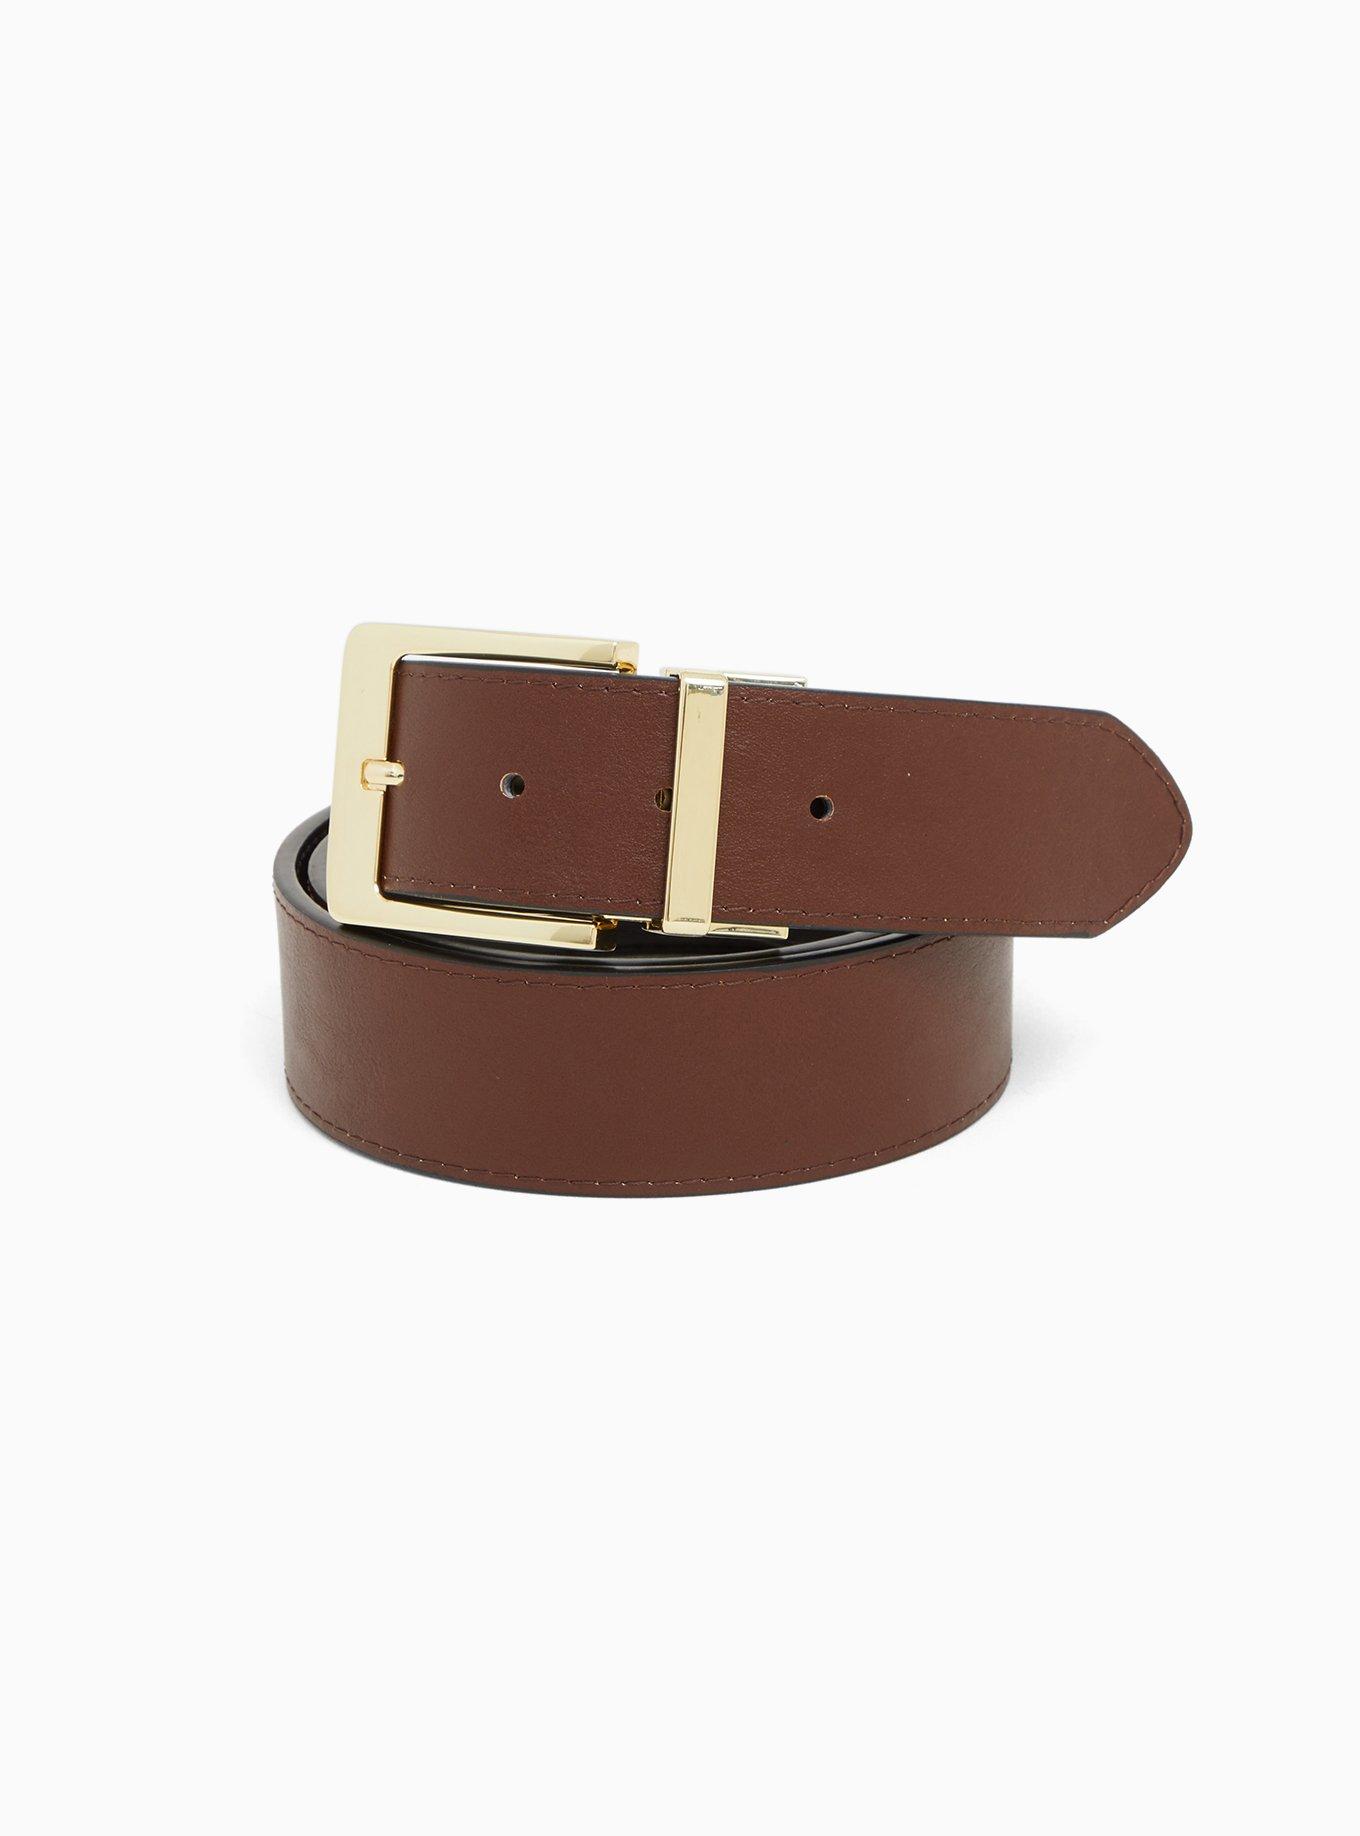 Plus Size - Black/Brown Reversible Belt - Torrid